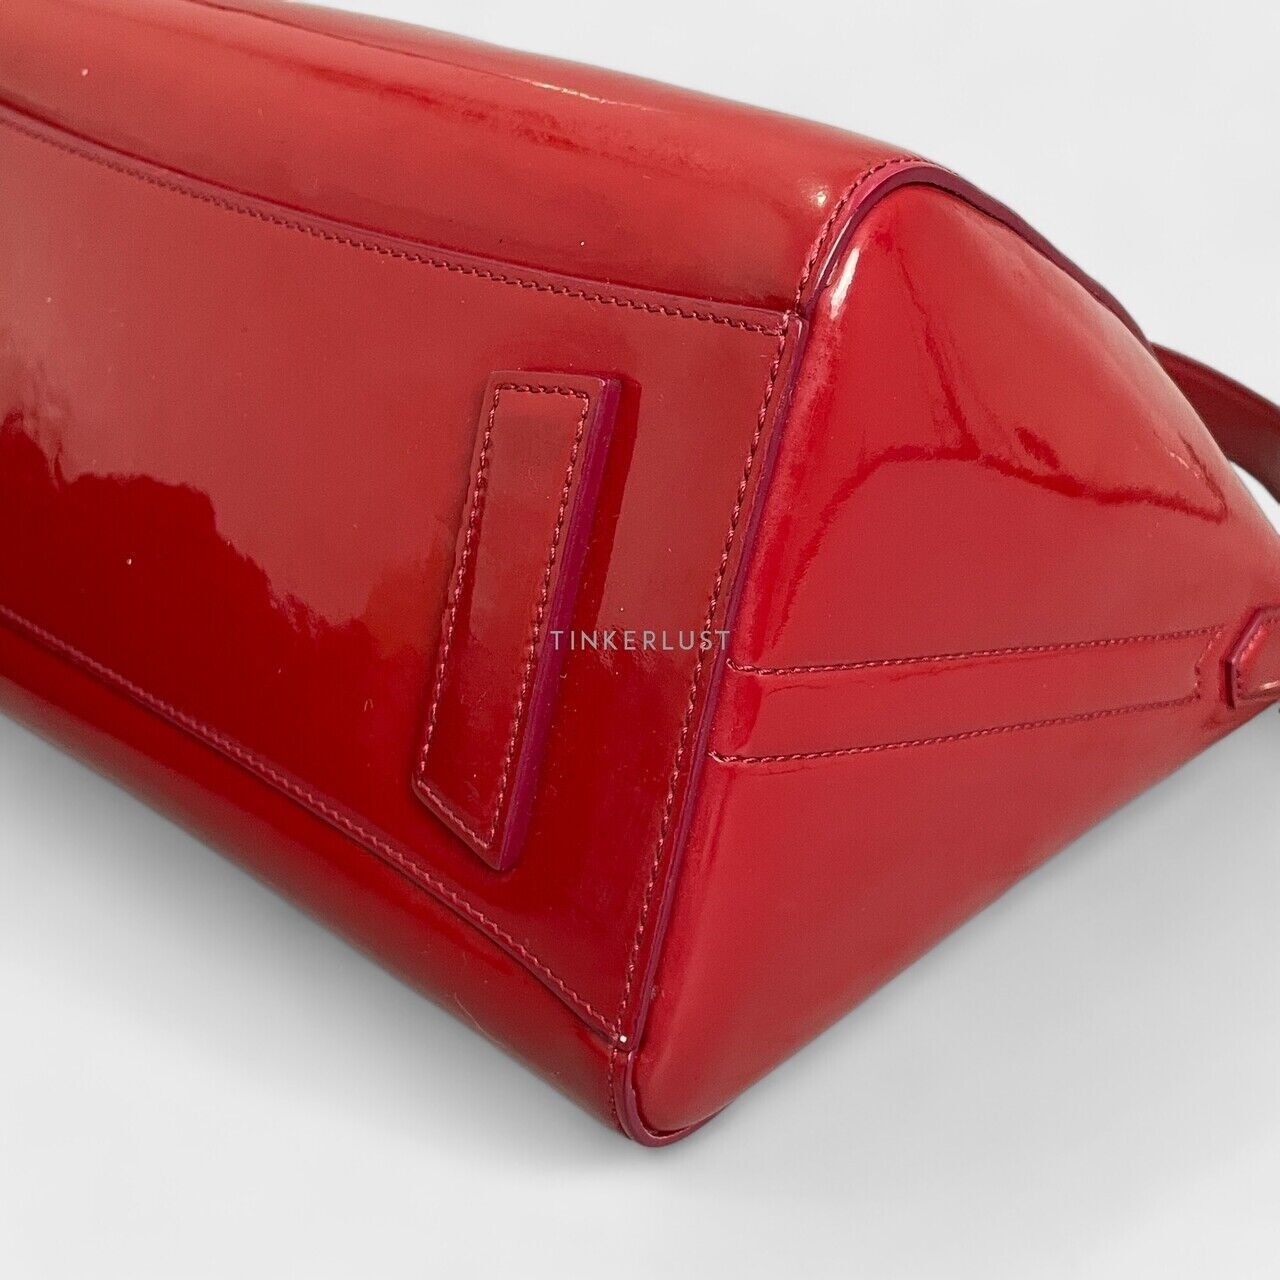 Givenchy Antigona Red Patent Leather SHW Satchel